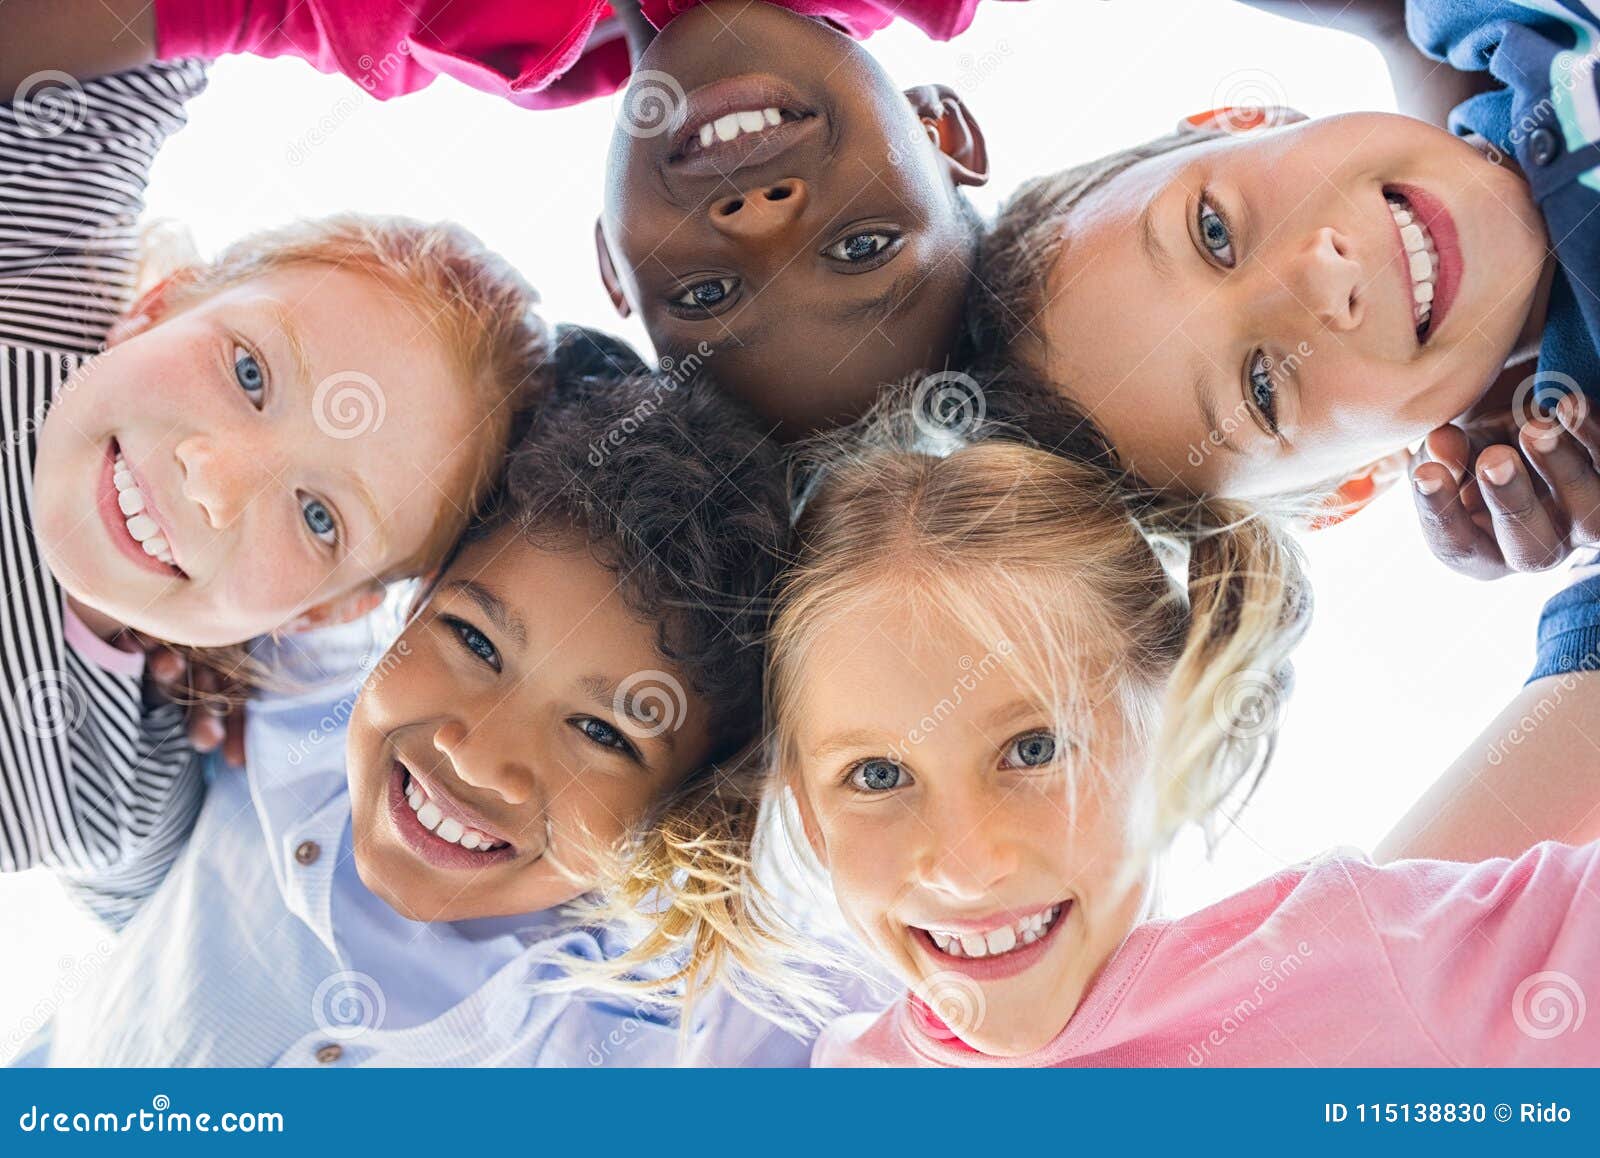 multiethnic children in a circle